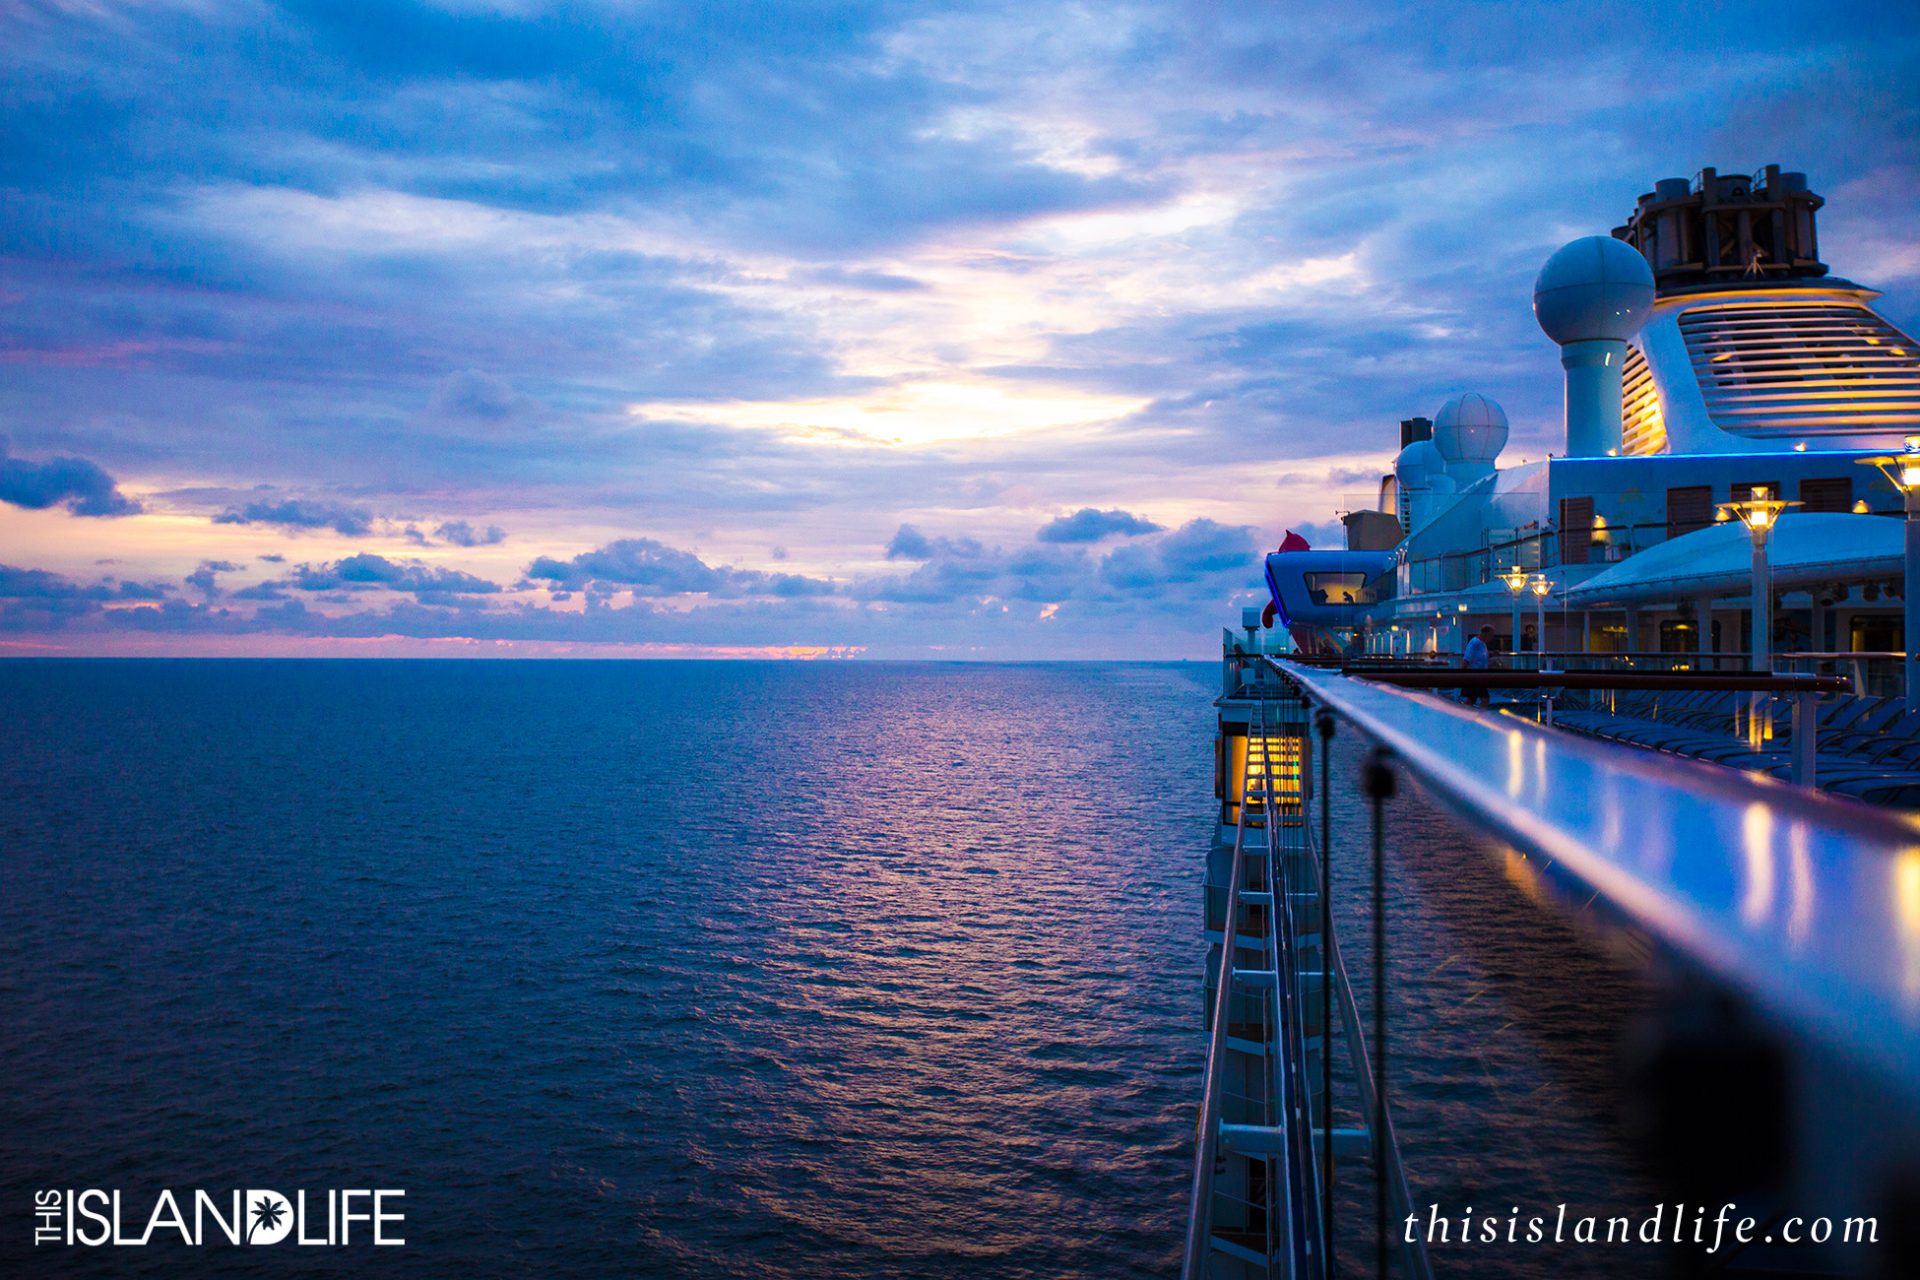 THIS ISLAND LIFE | Cruising the high seas with Royal Carribean